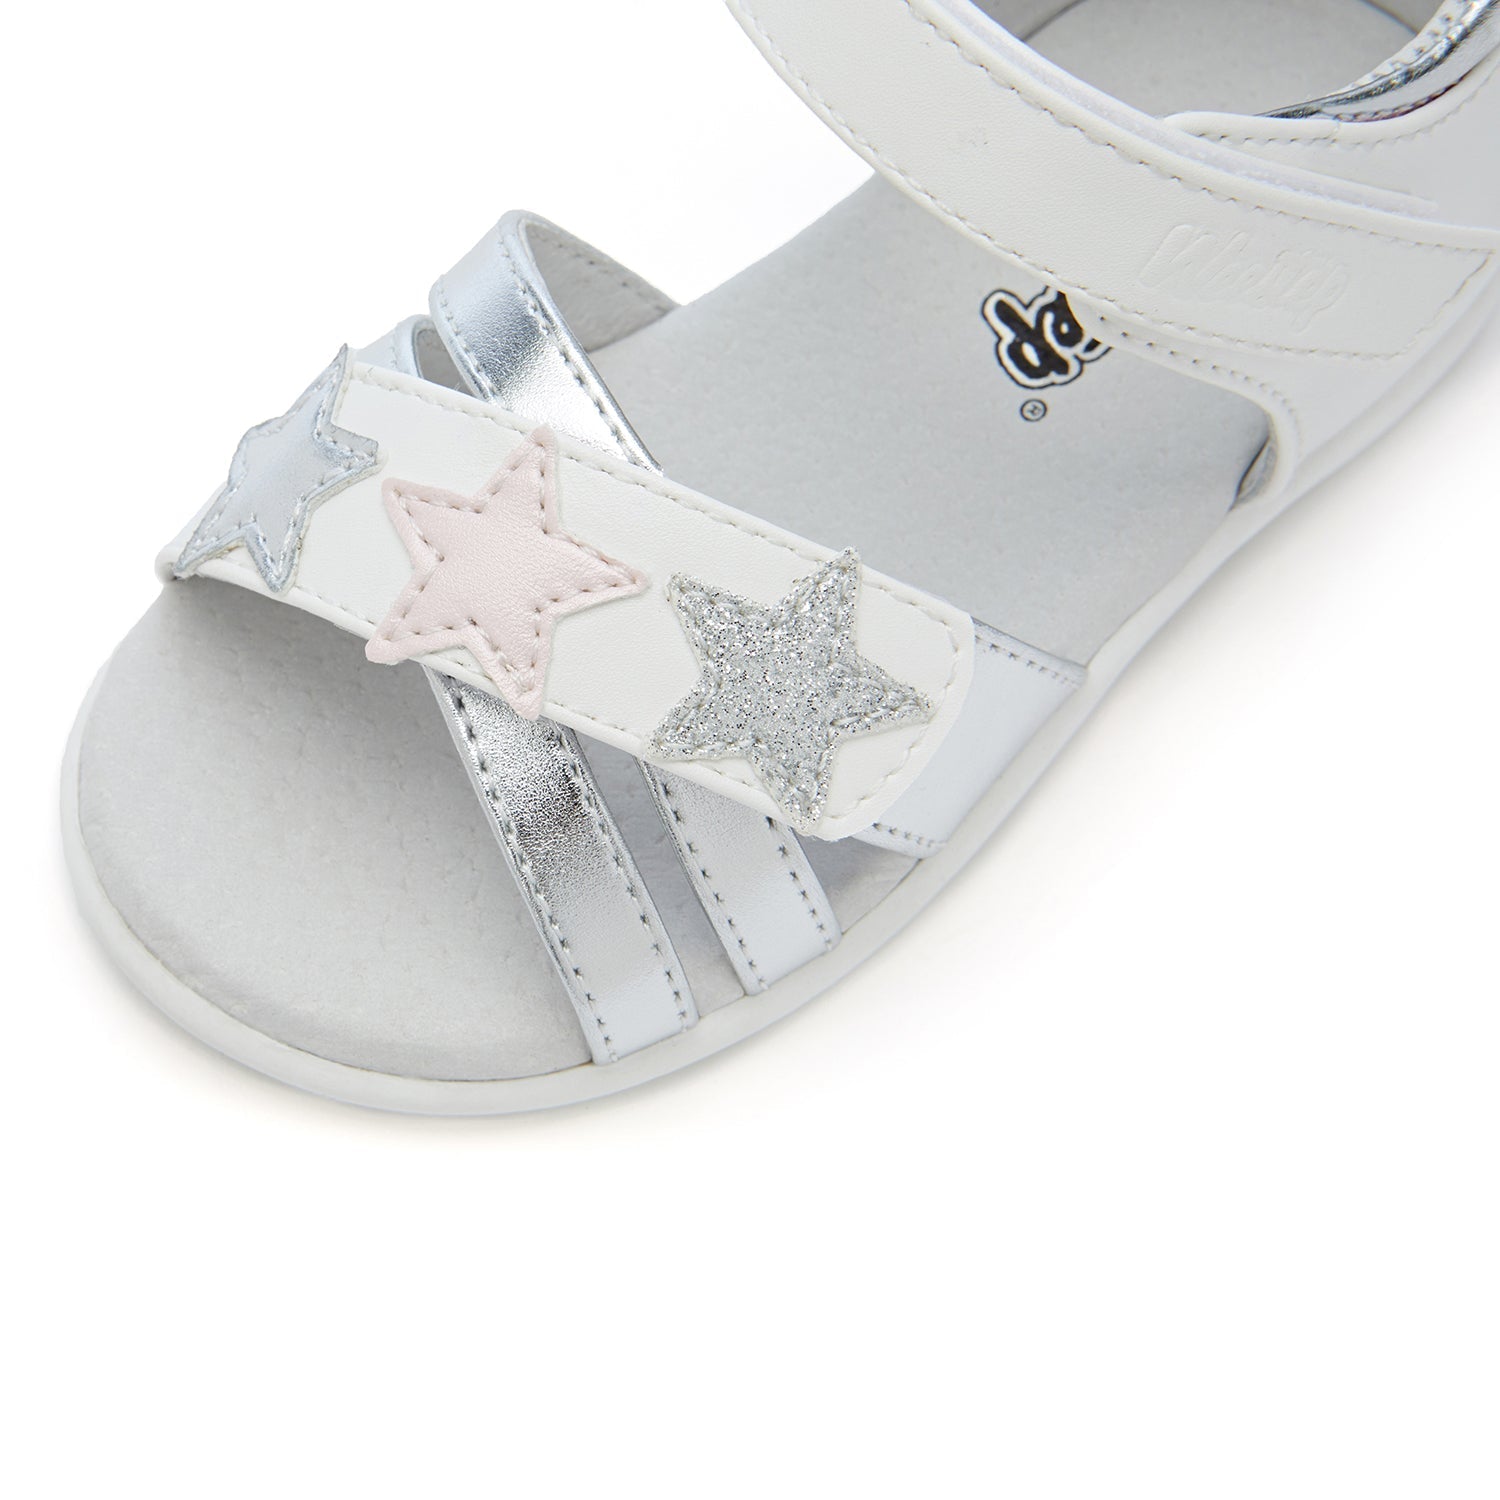 Toddler Stars Leather Sandal